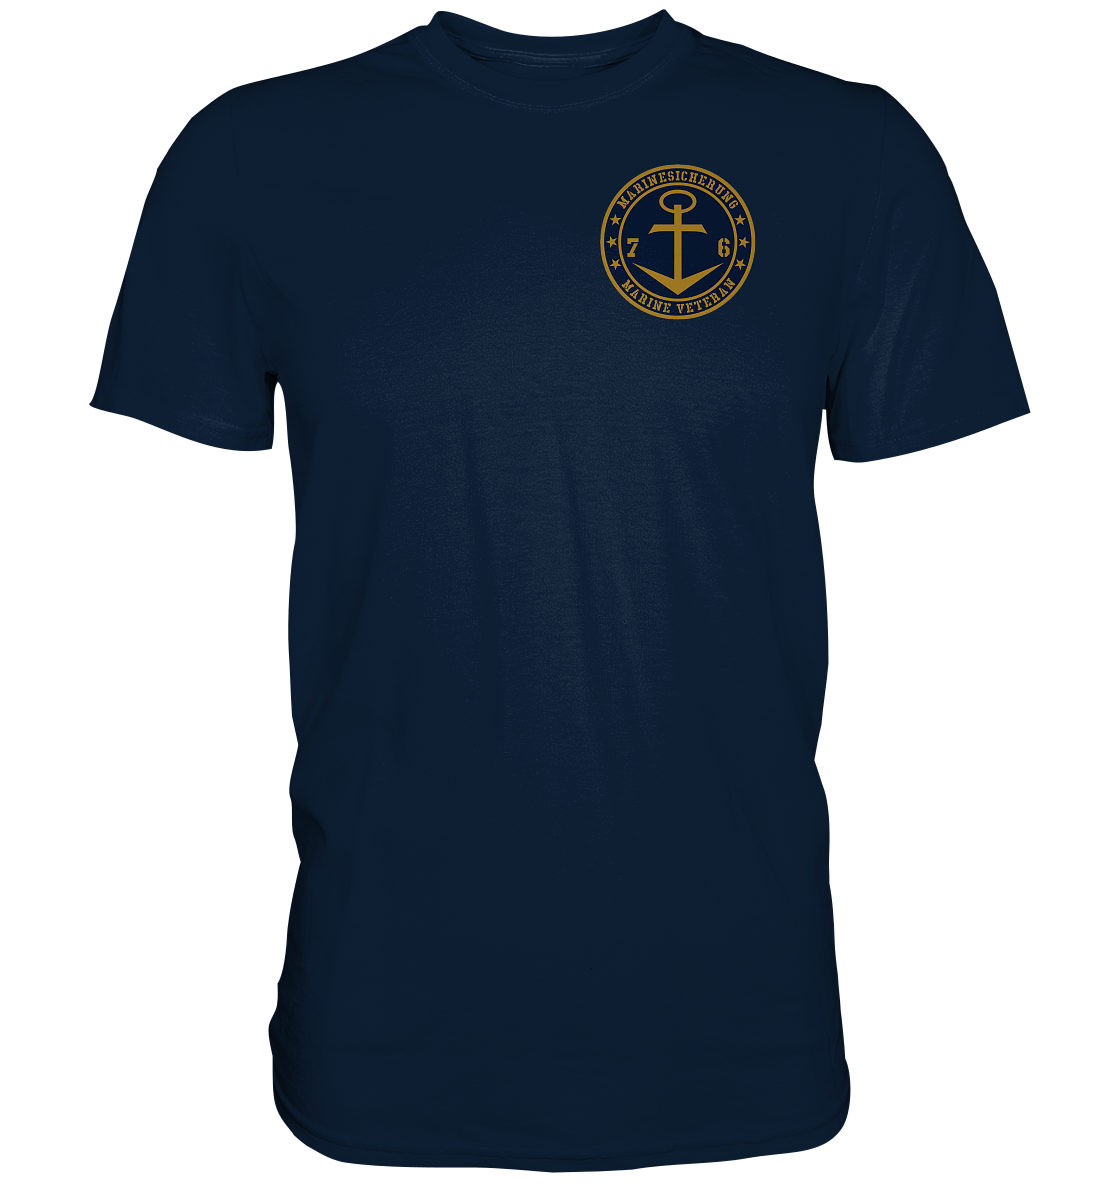 Marine Veteran 76er MARINESICHERUNG Brustlogo - Premium Shirt